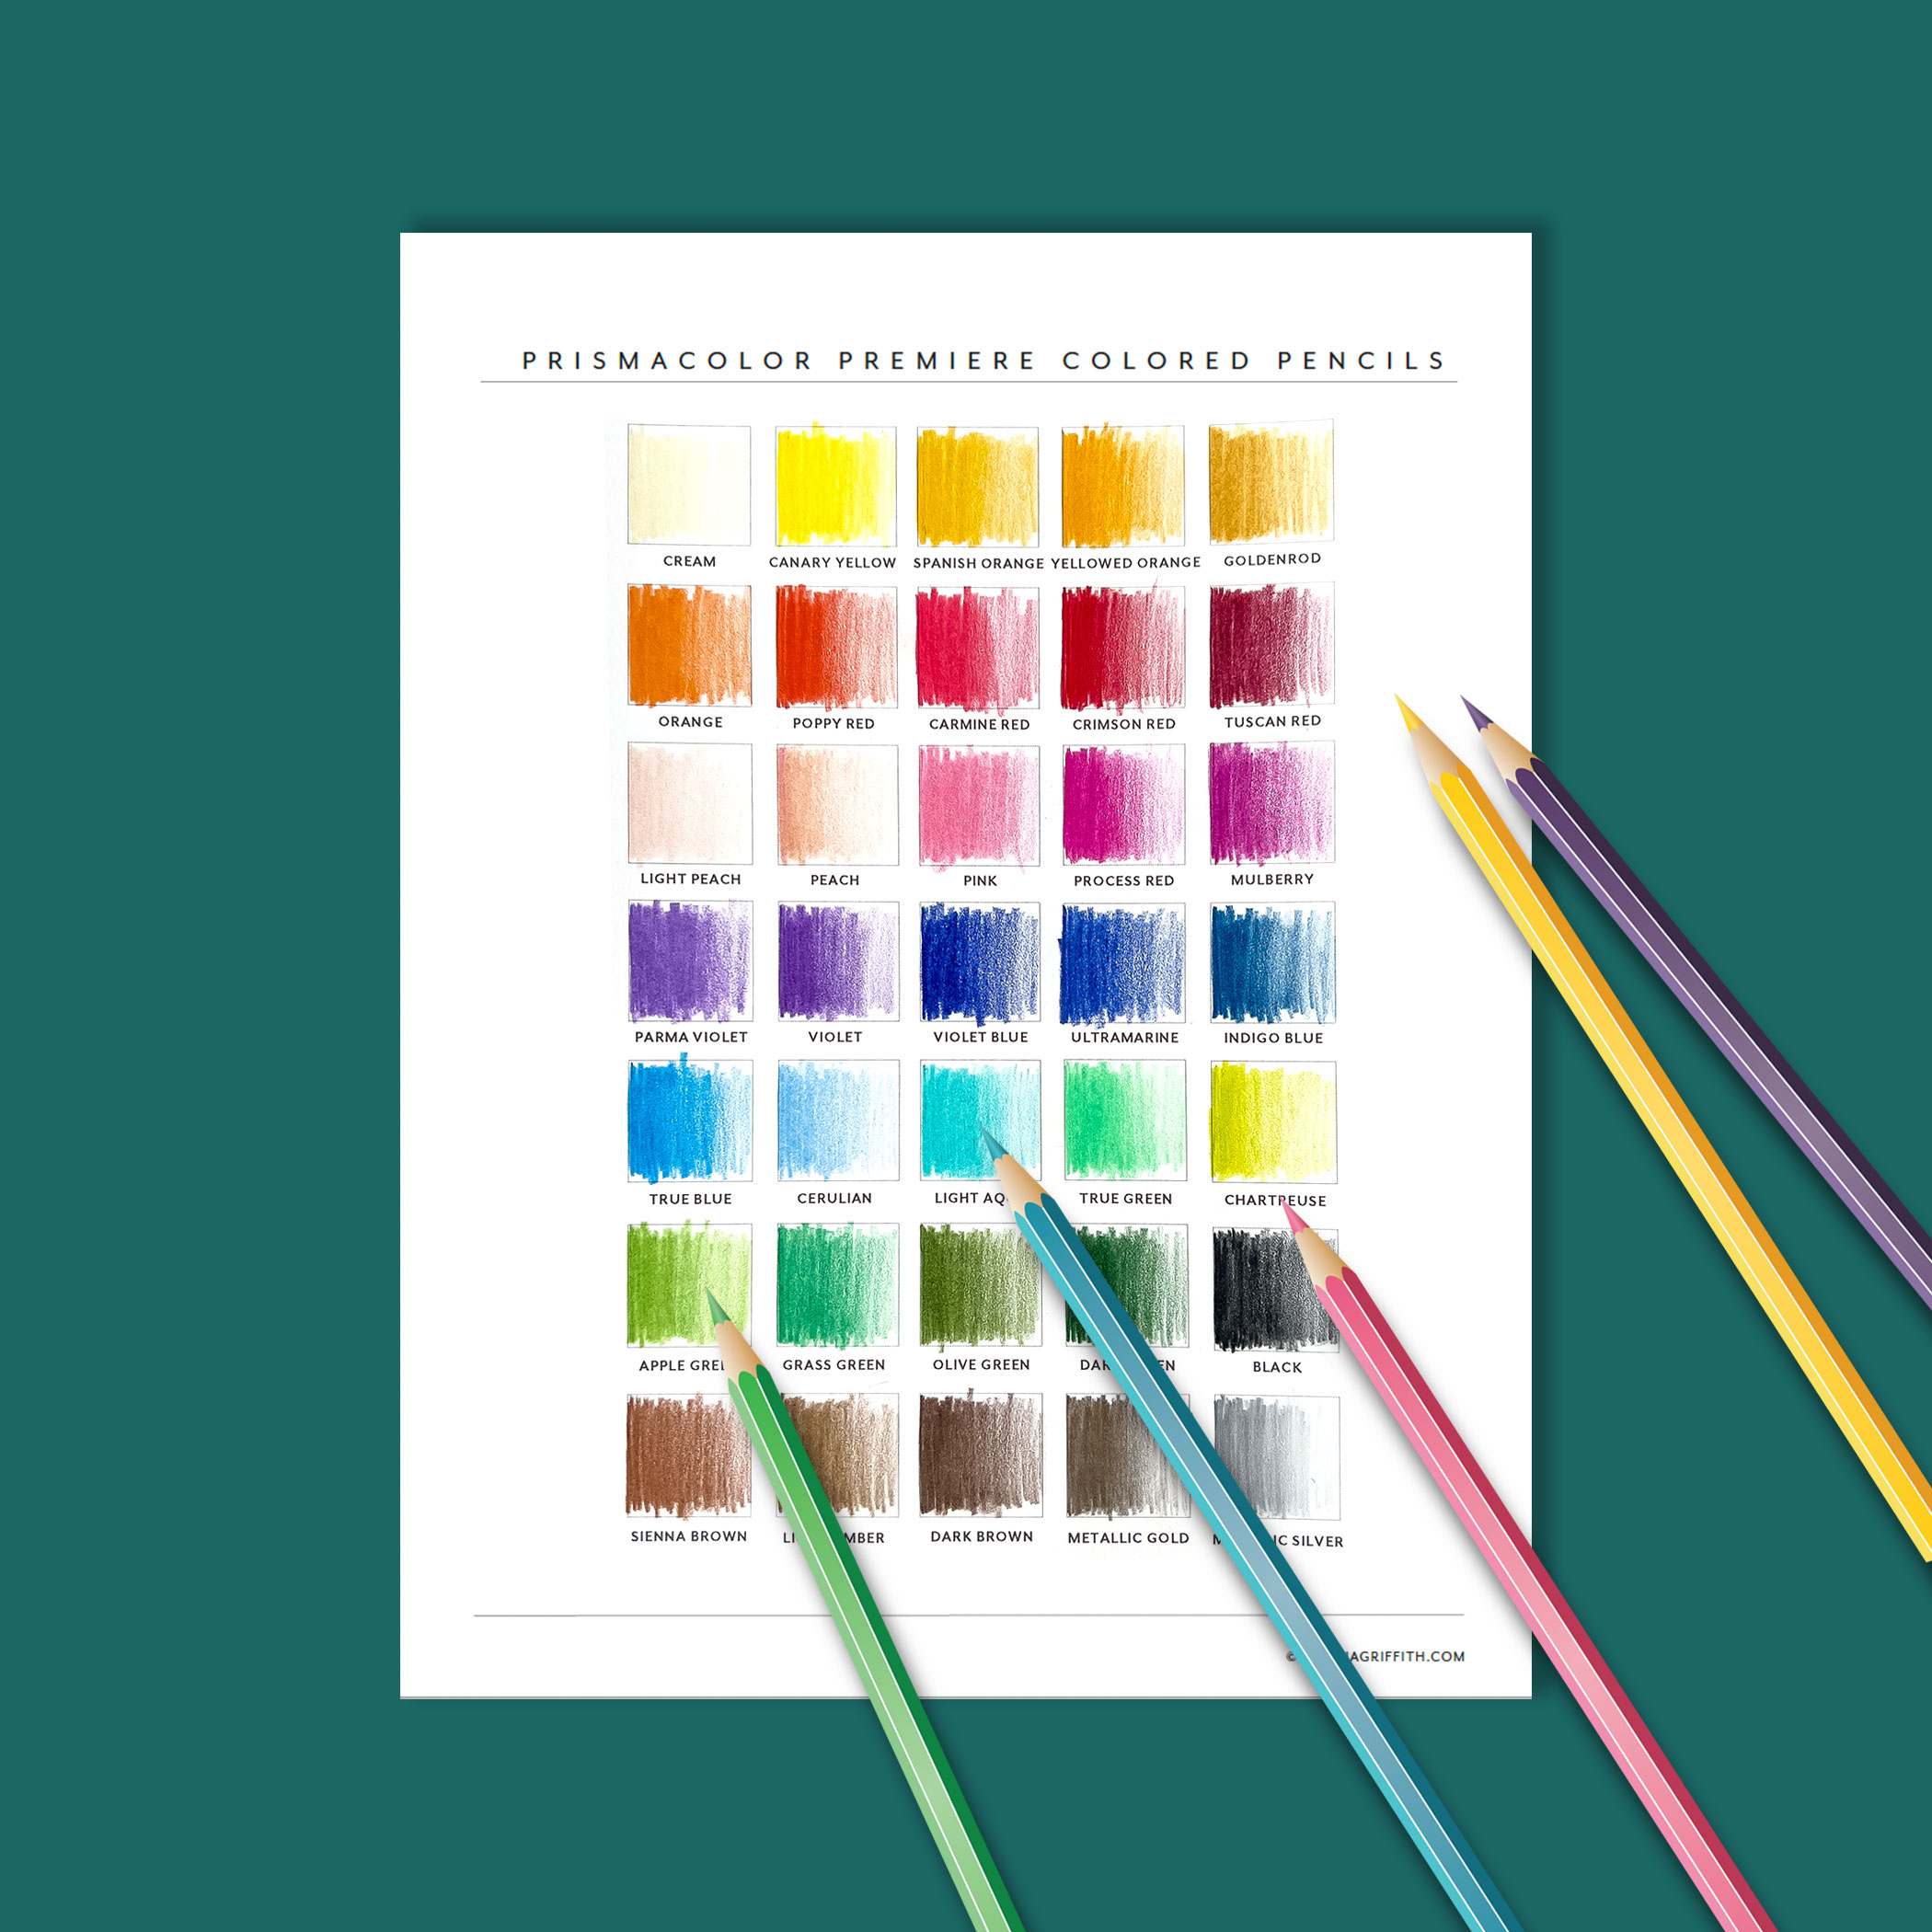 Download the Best Order Prismacolor Pencil Color Charts